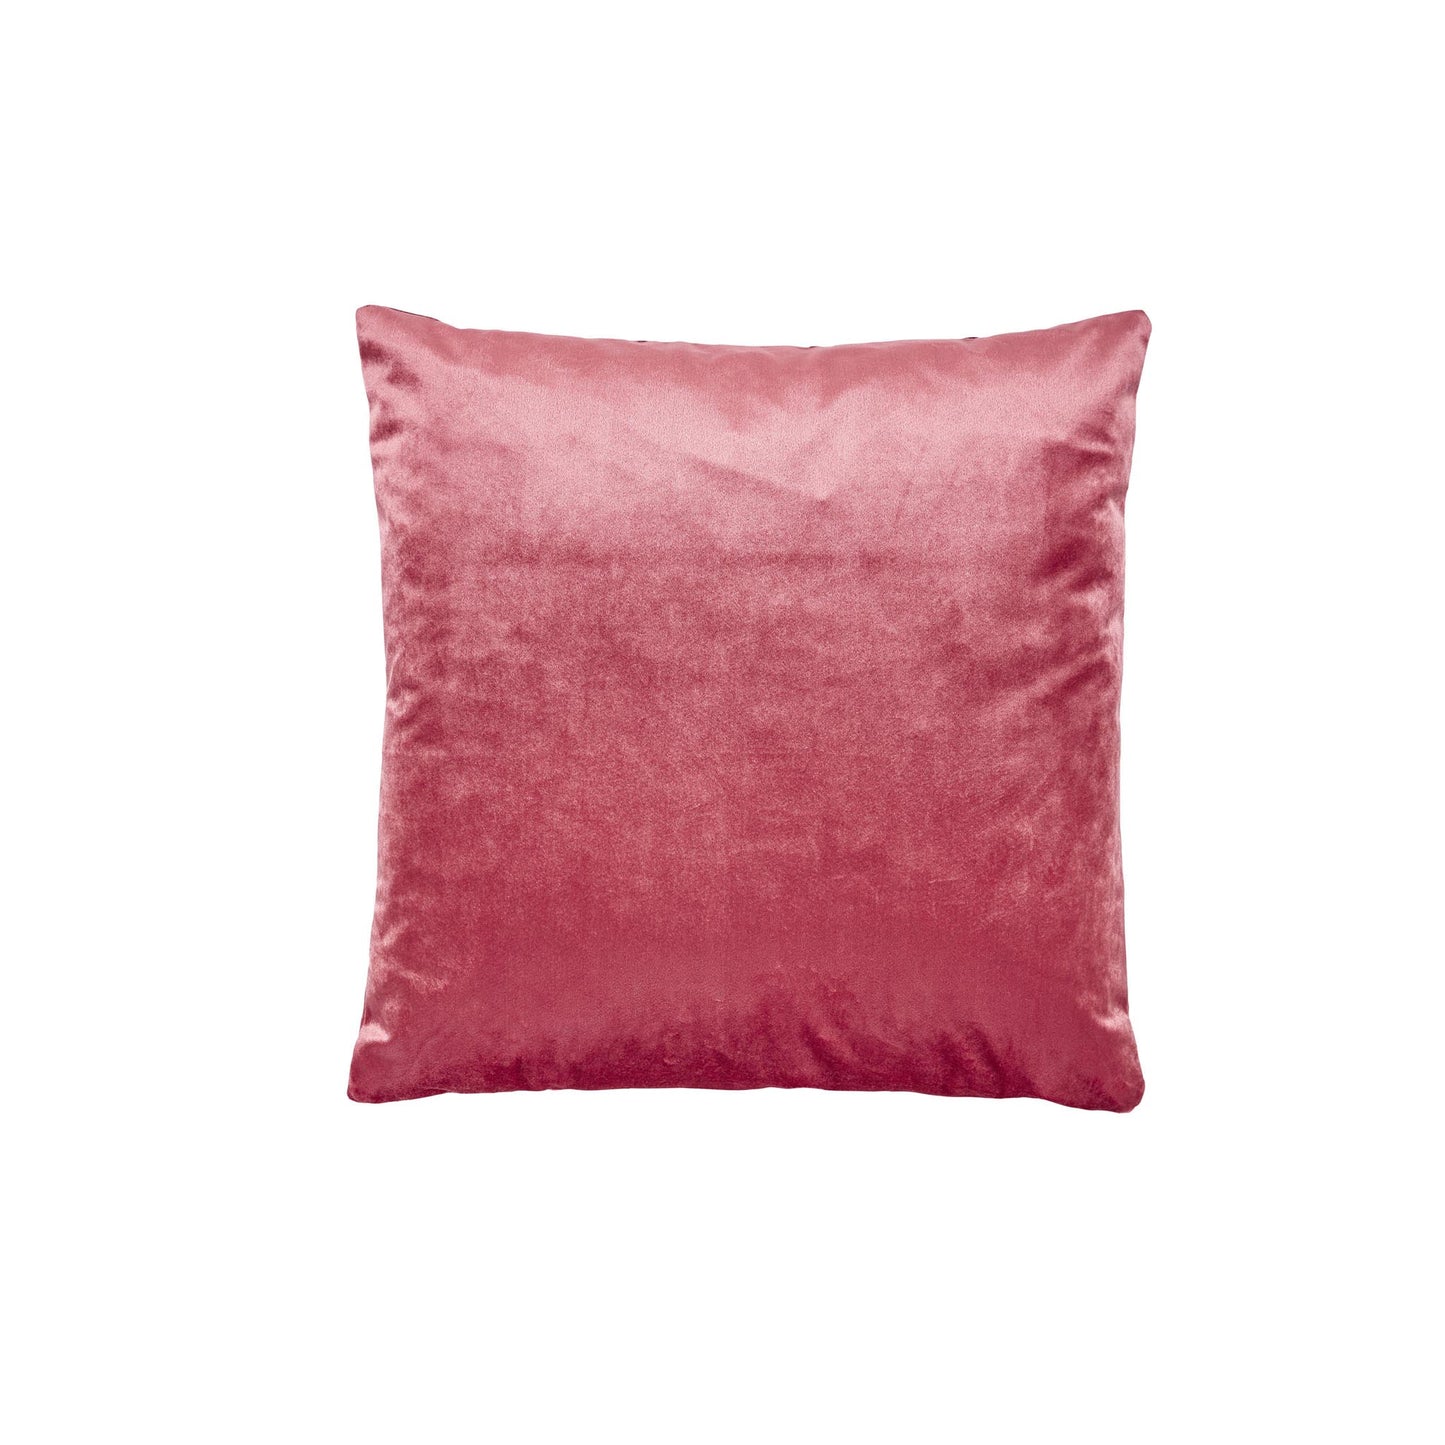 Roma Velourpude i pink fra Jakobsdals, 259 kr.